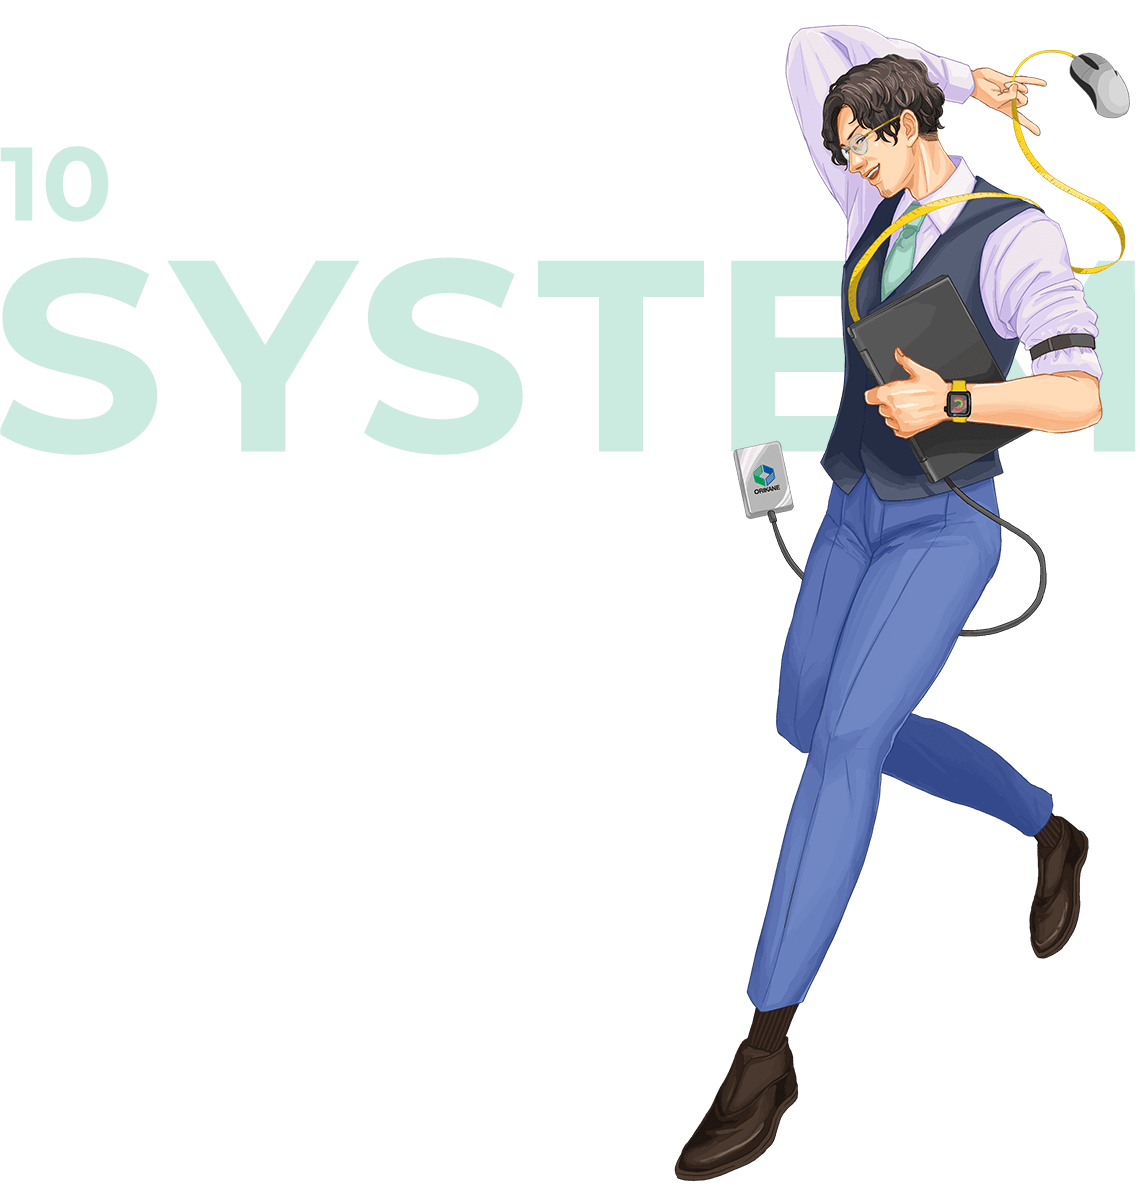 10 SYSTEM